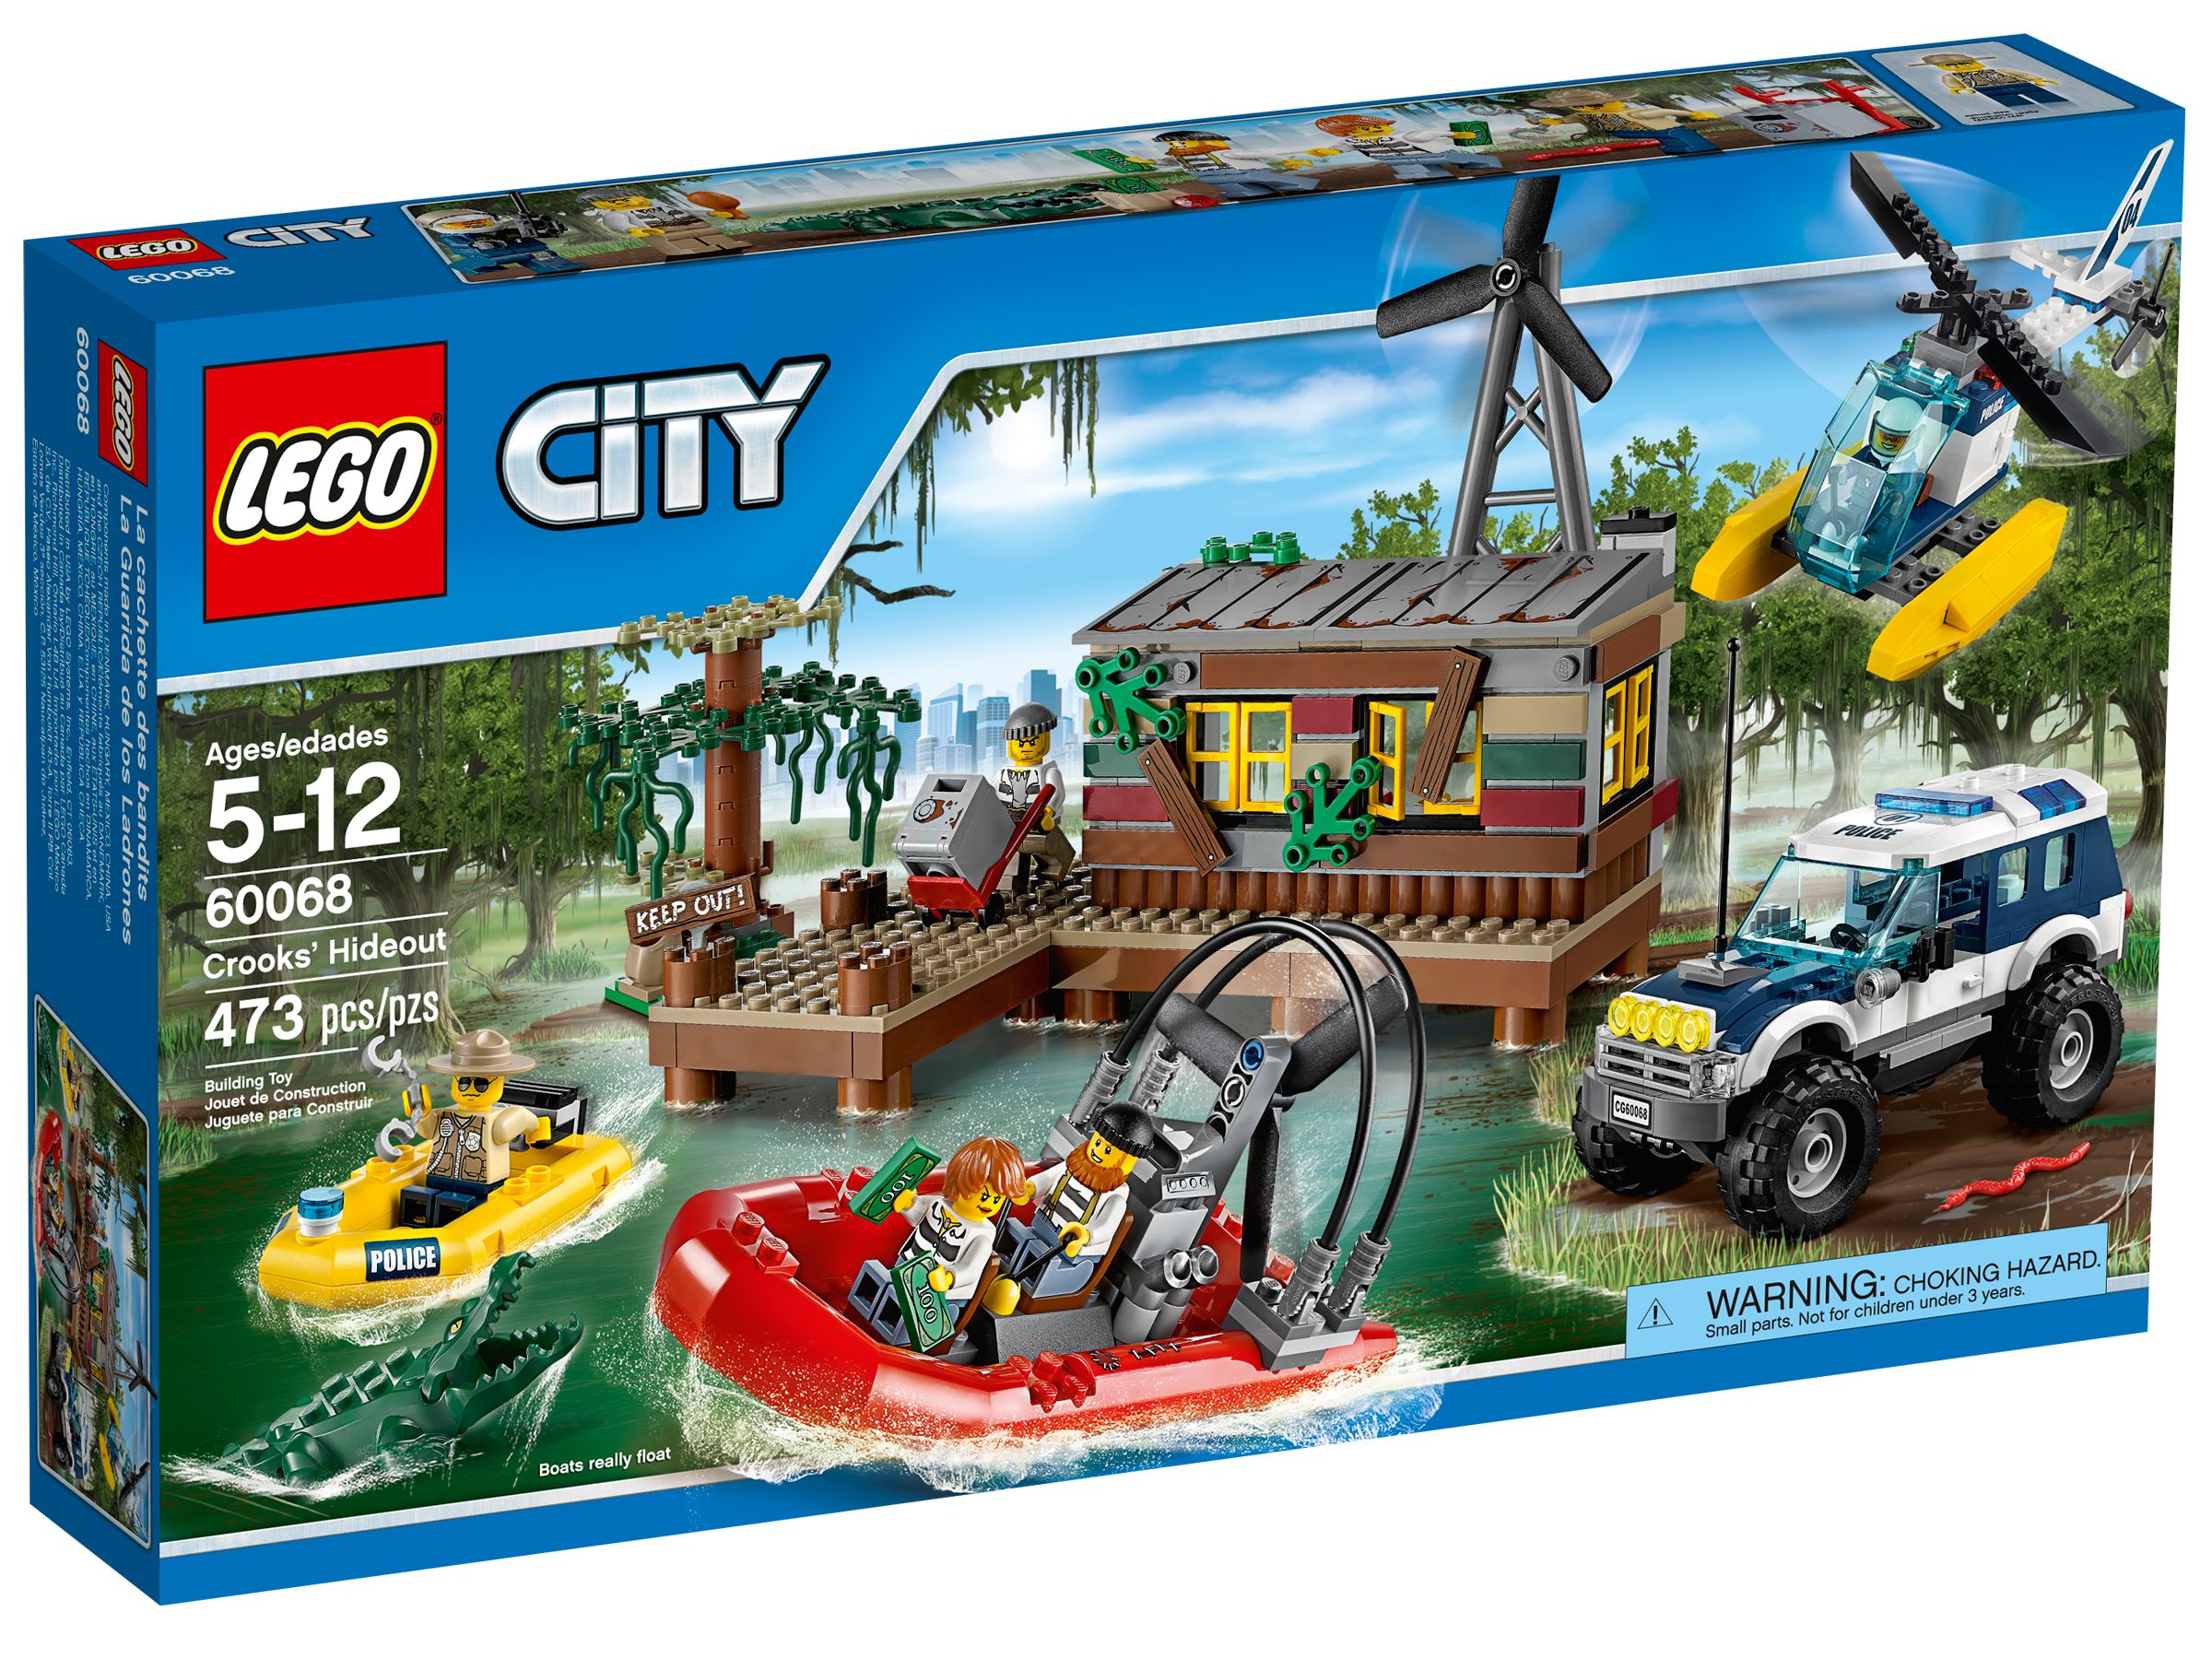 Lego City Ascunzisul infractorilor 5-12 ani 